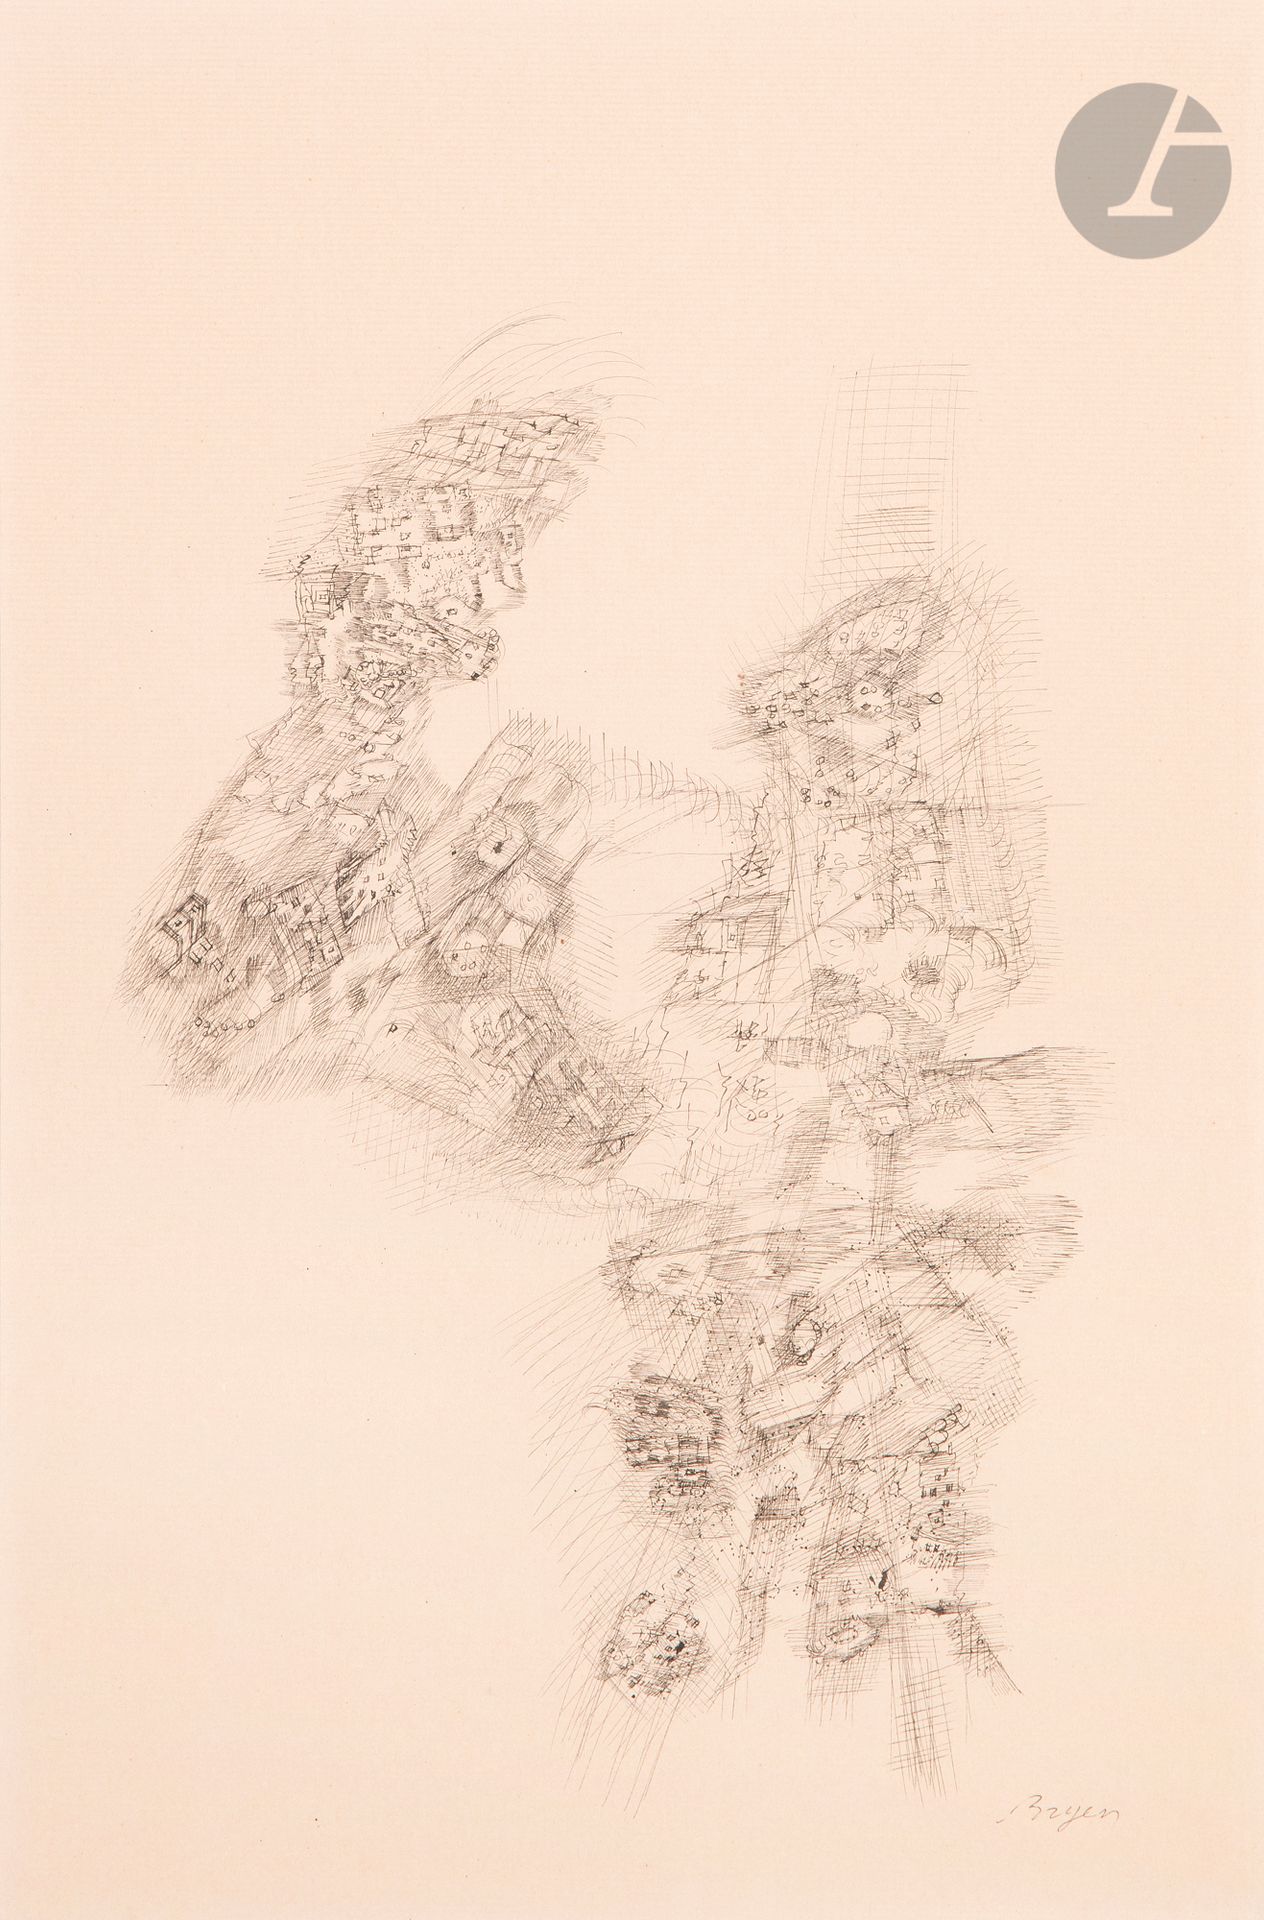 Null 卡米尔-布莱恩(1907-1977)
构成, 1971年
墨水。
右下方有签名。
背面有签名和日期。
42,5 x 28 cm